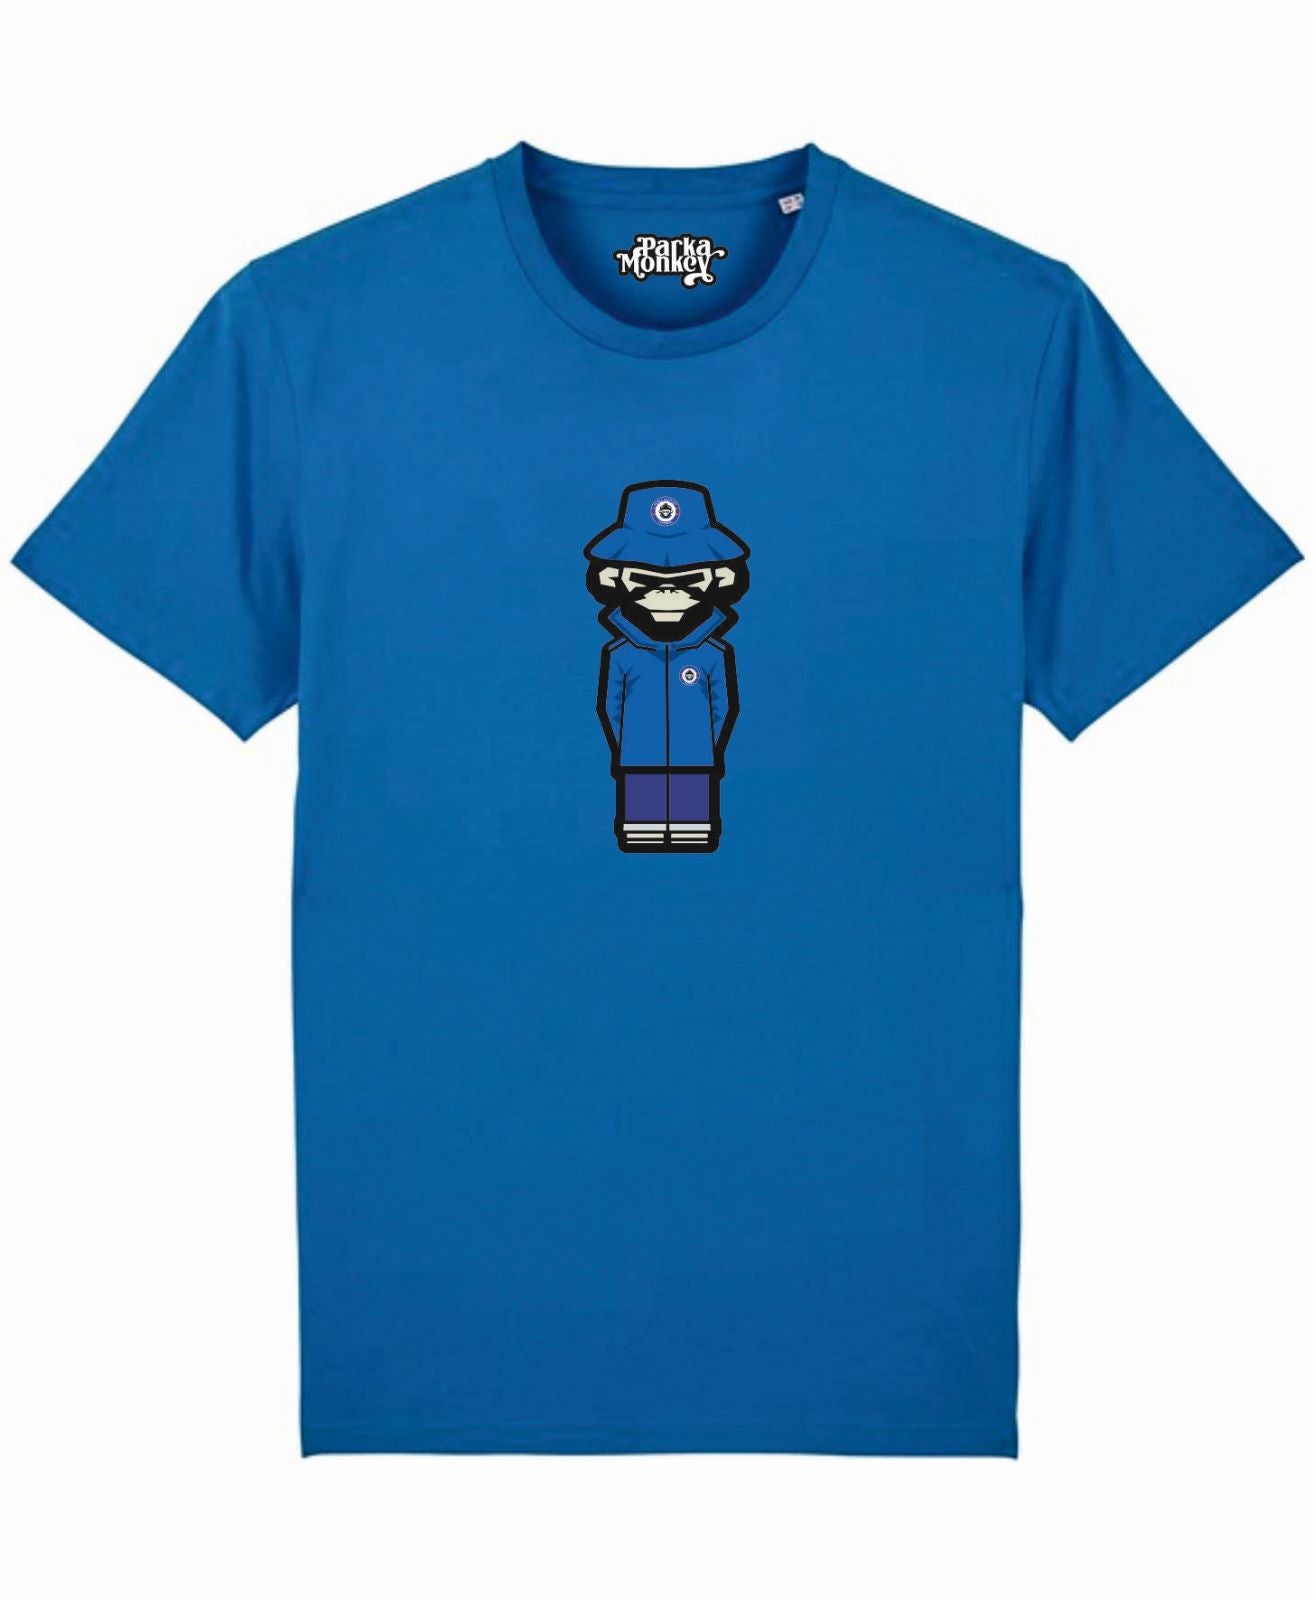 Match Day Burnage T-Shirt - The Blues - Parka Monkey